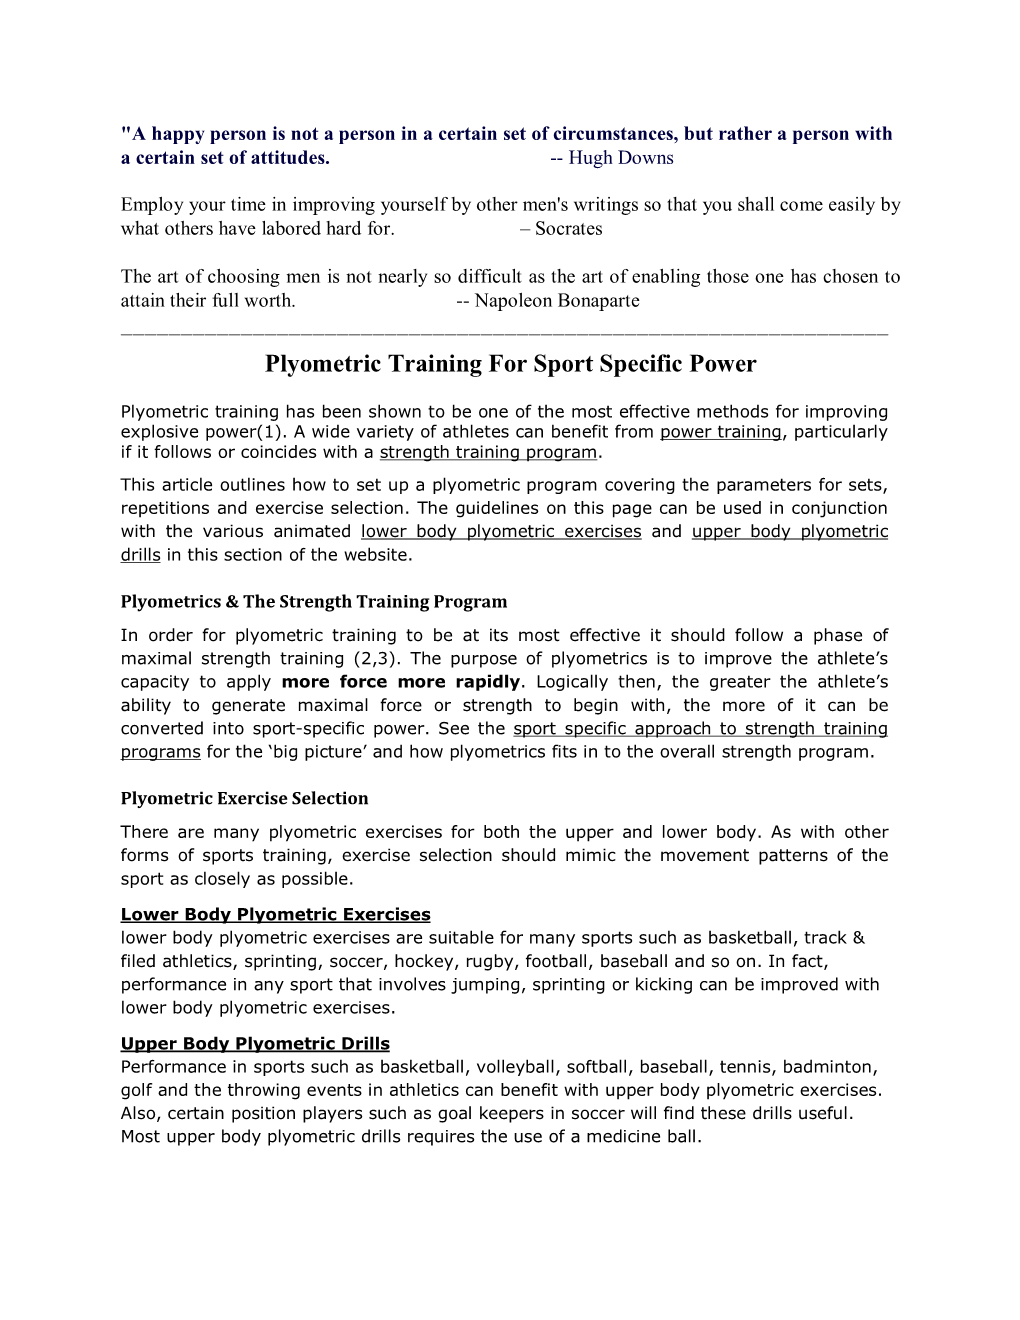 Plyometric Training for Sport Specific Power